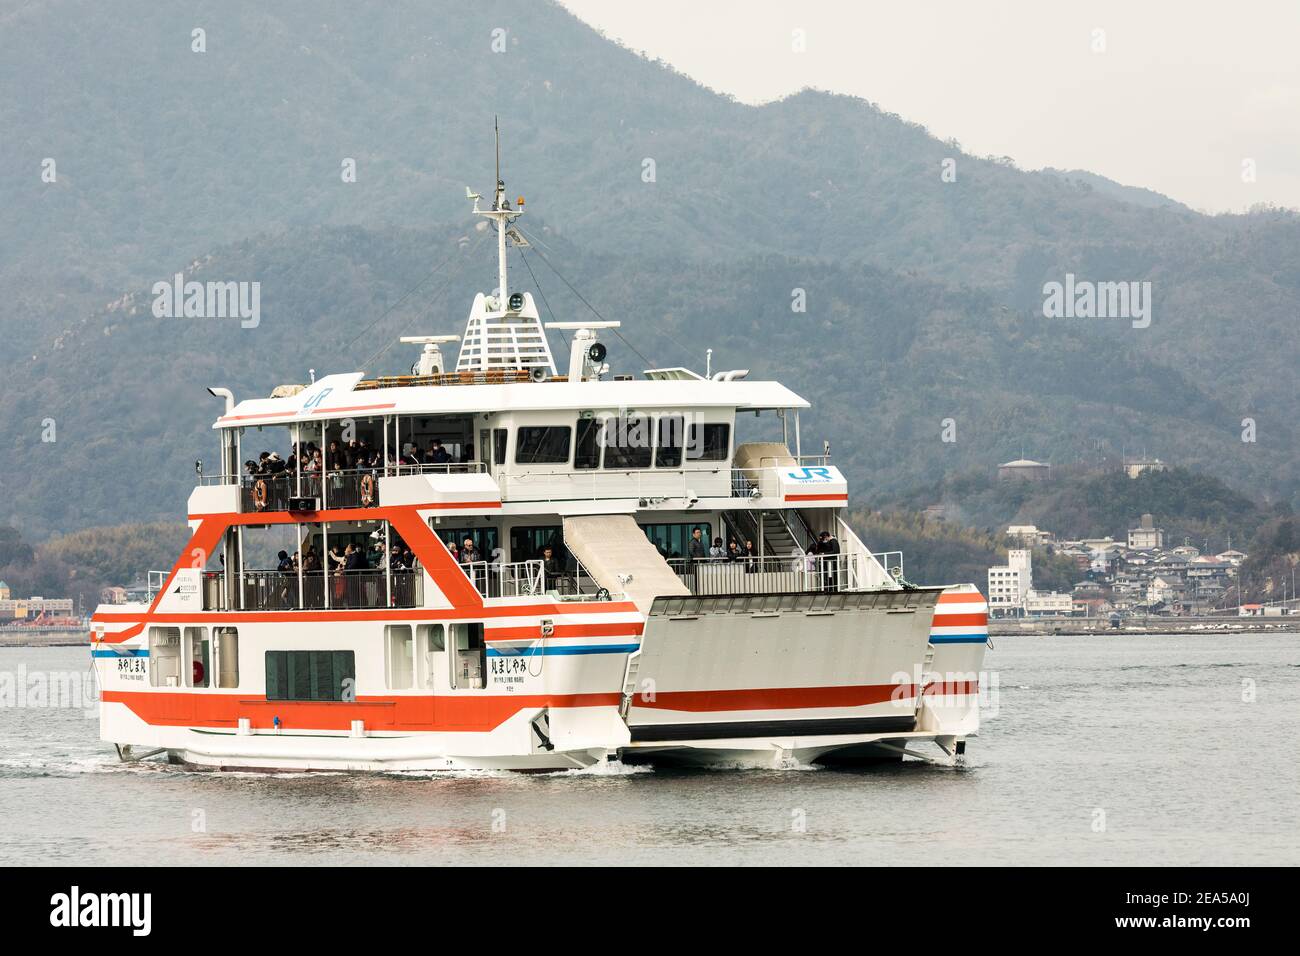 The Miyajima Maru passenger ferry to the island, Japan Stock Photo